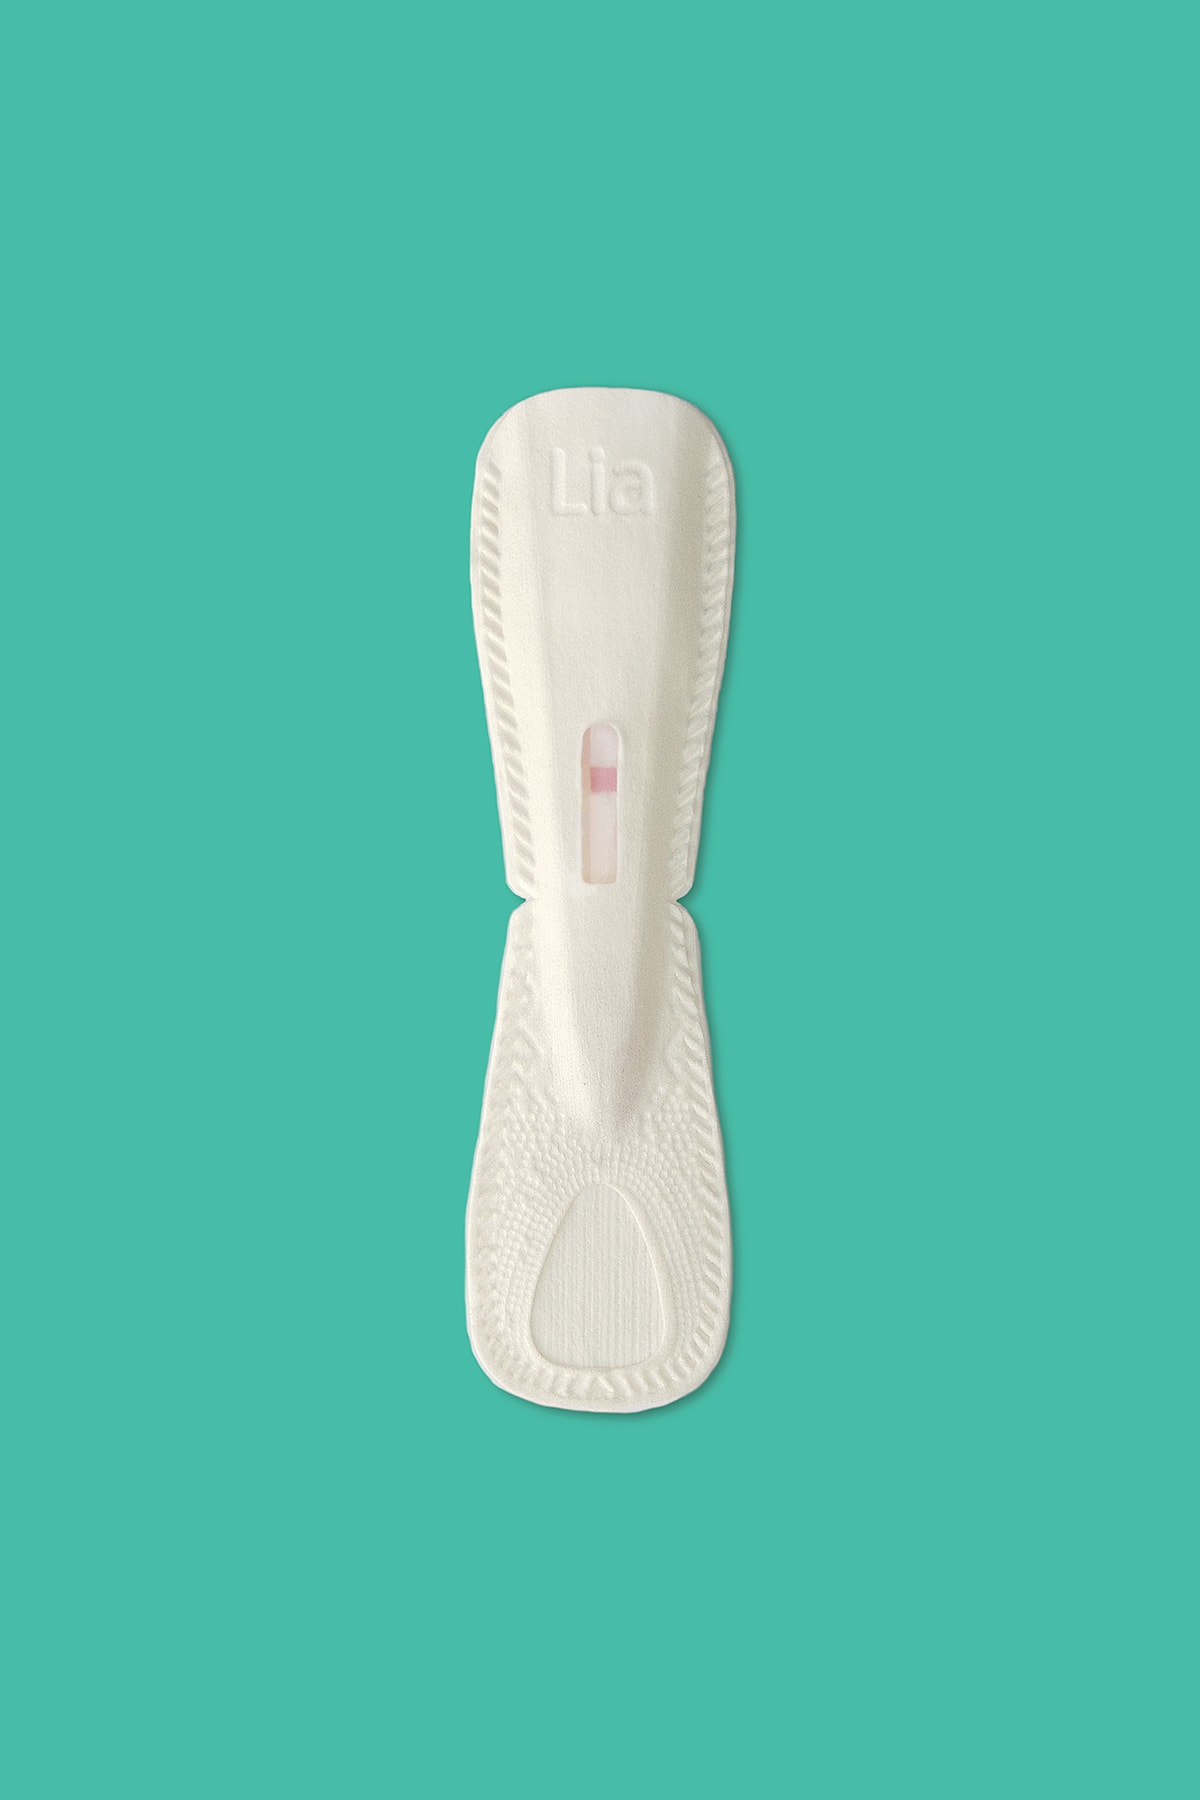 Lia Pregnancy Test Flushable Biodegradable Sustainable